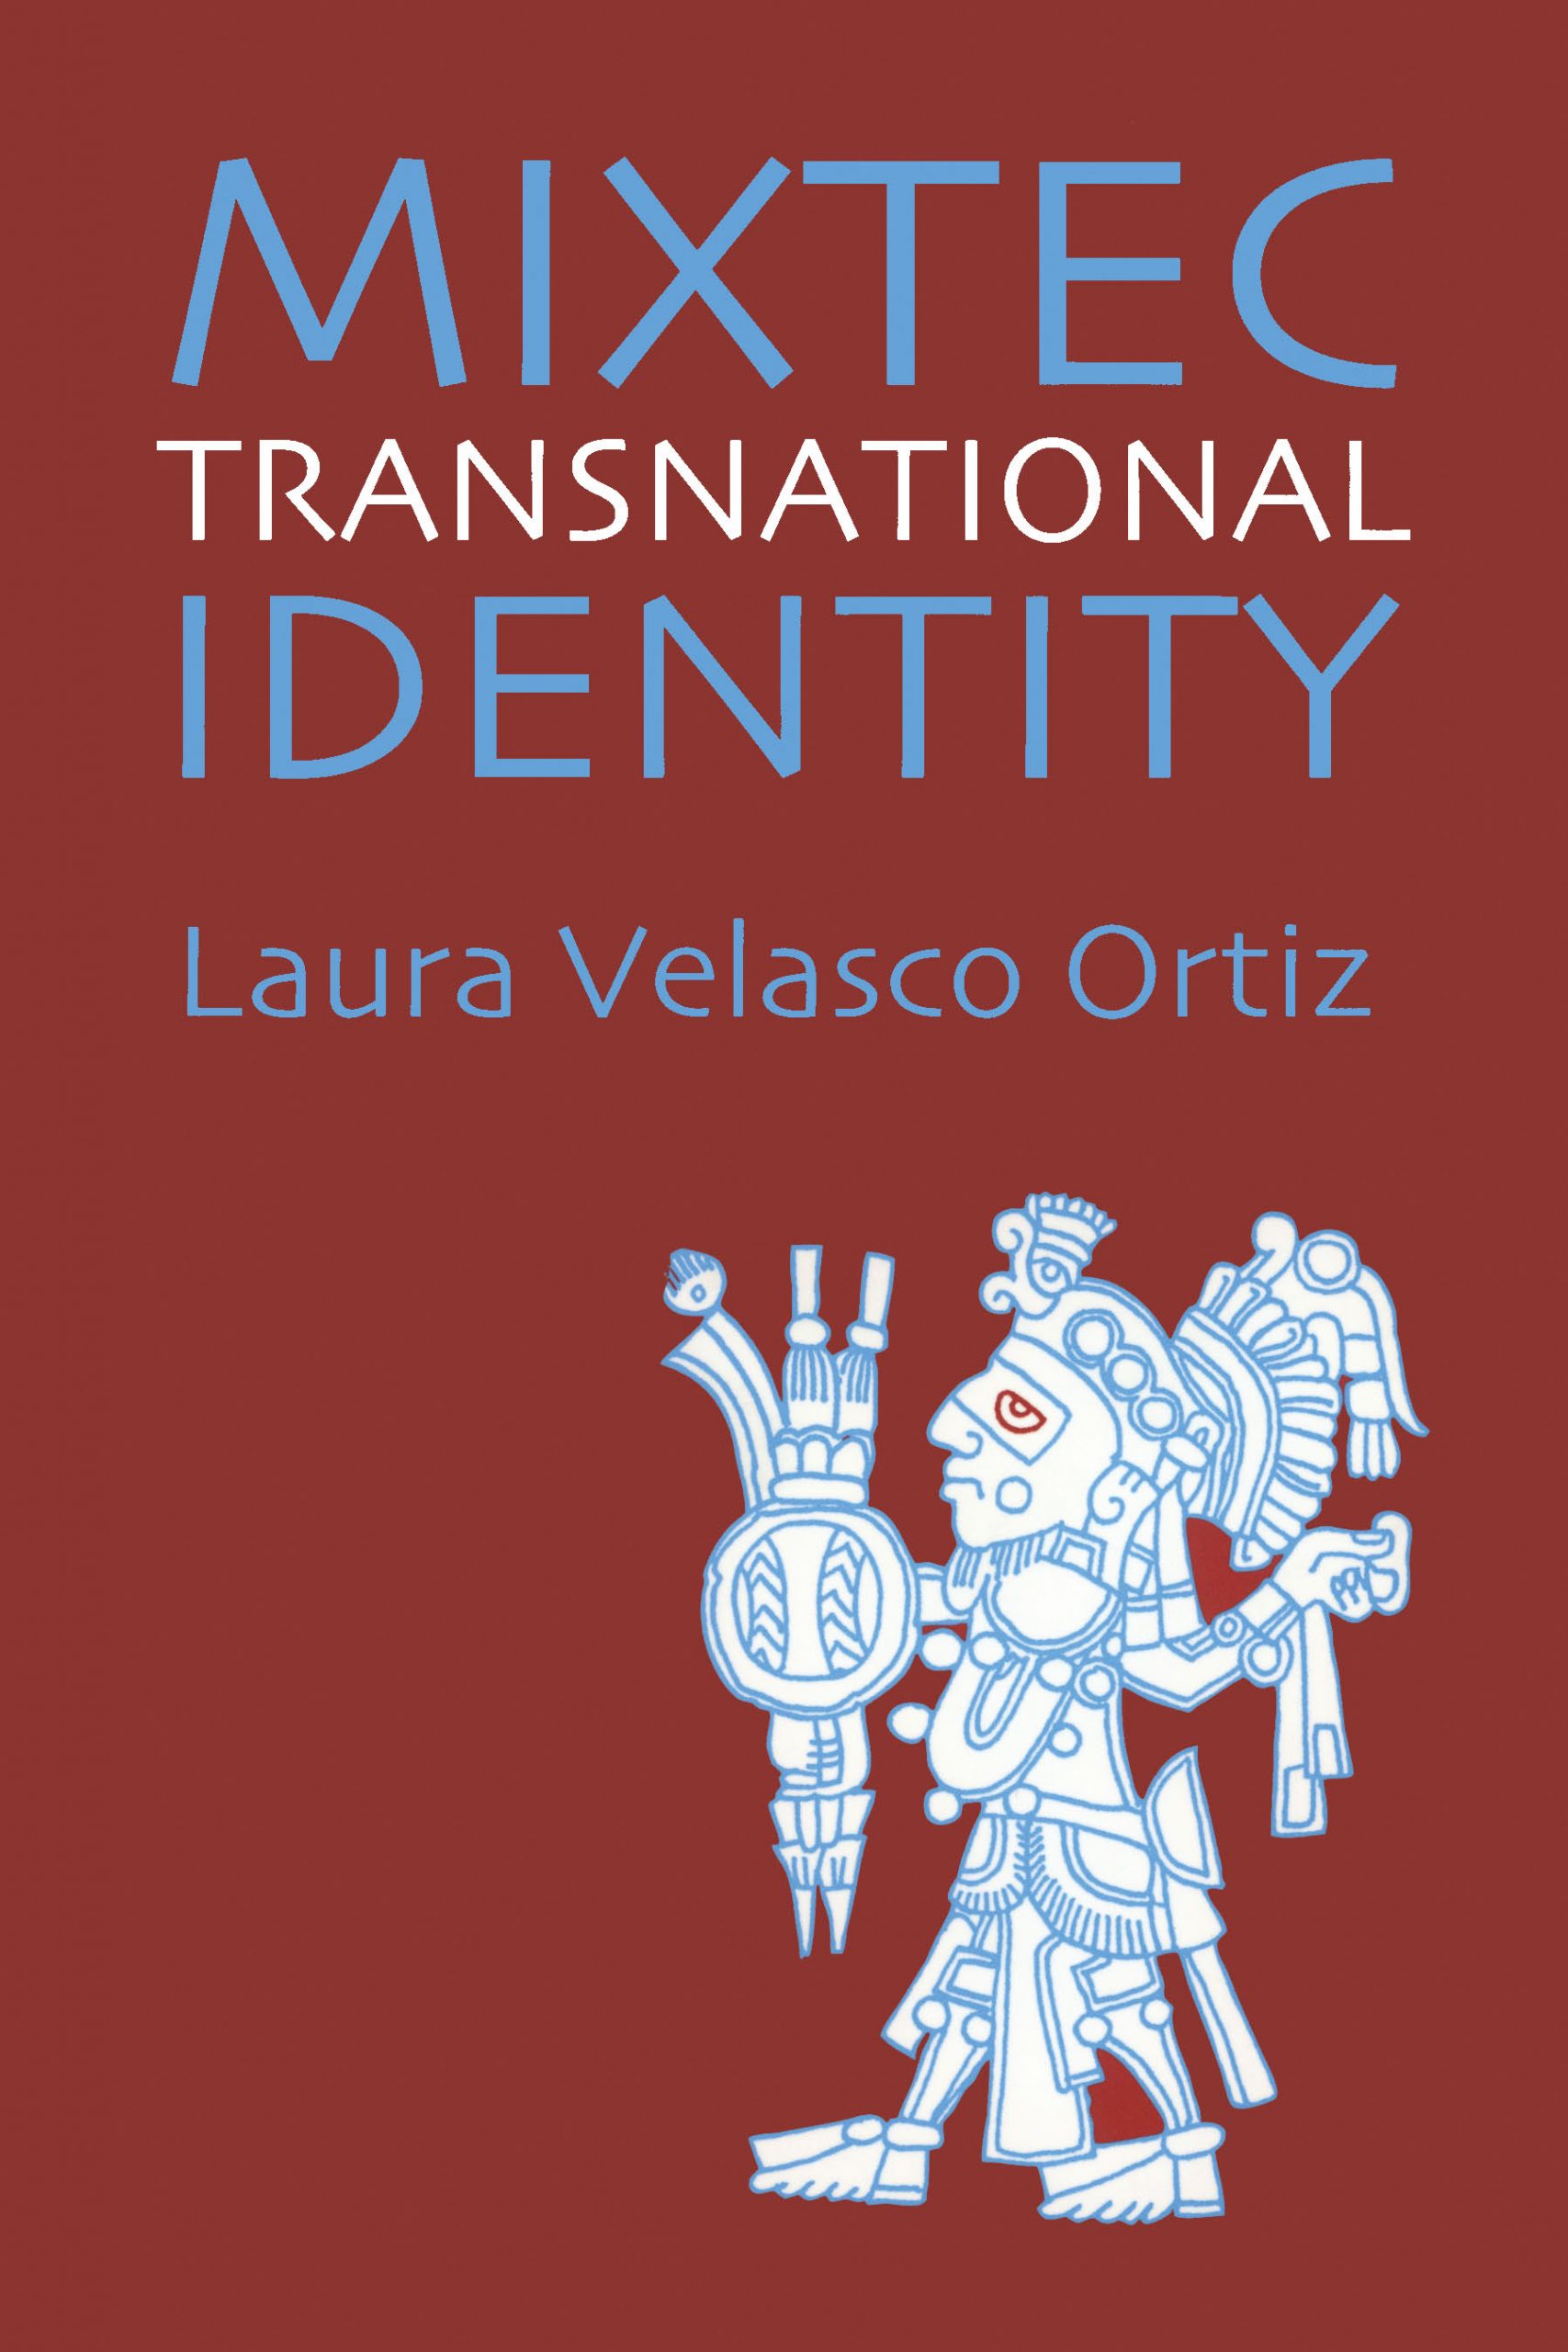 Mixtec Transnational Identity